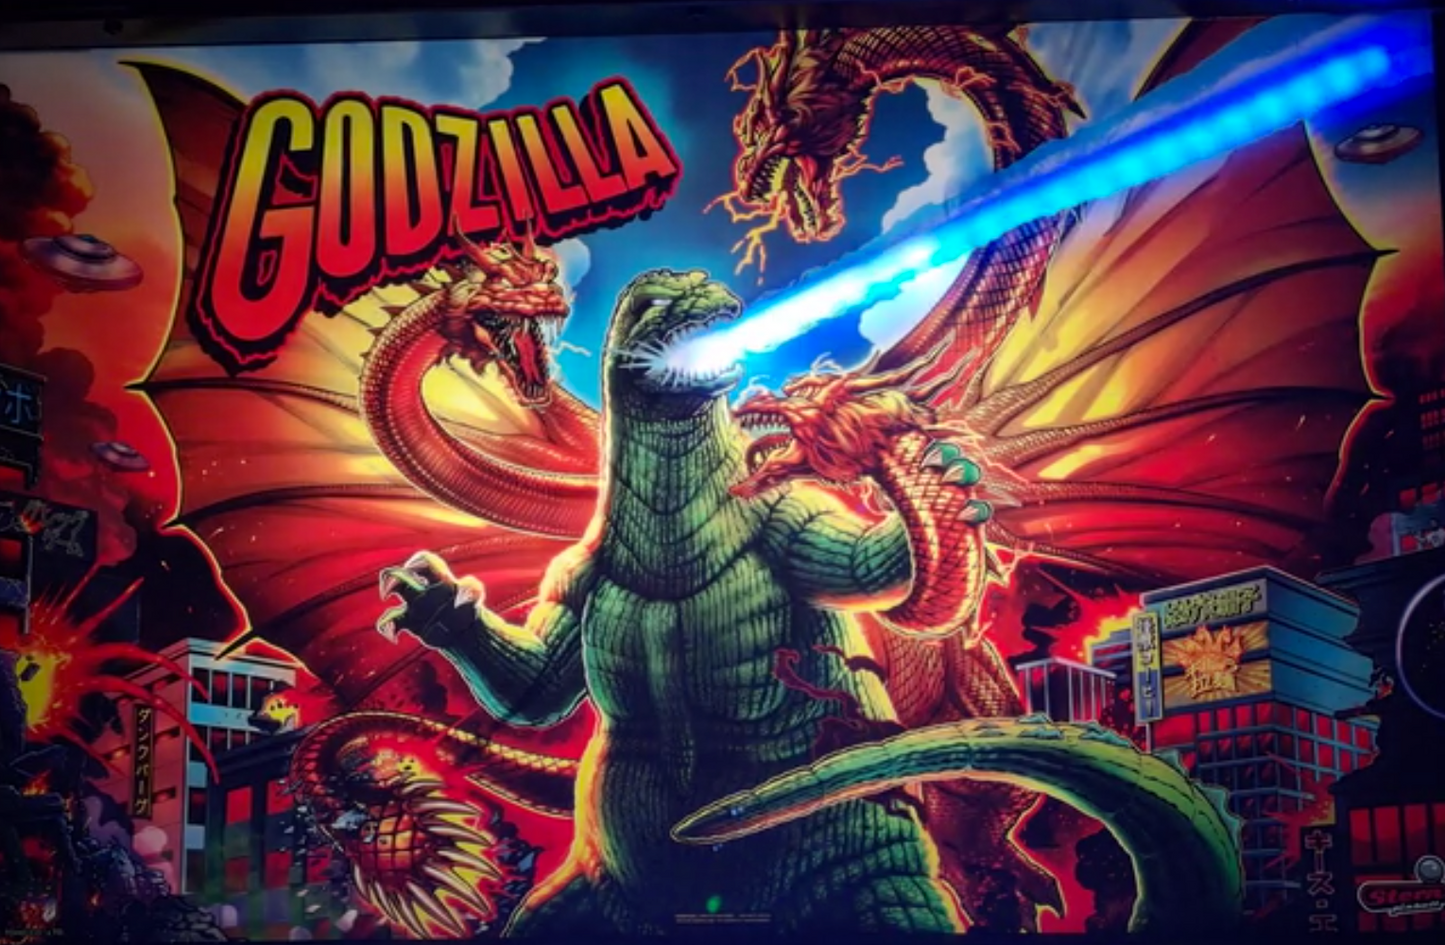 Godzilla "Lolly UFO" mod kit